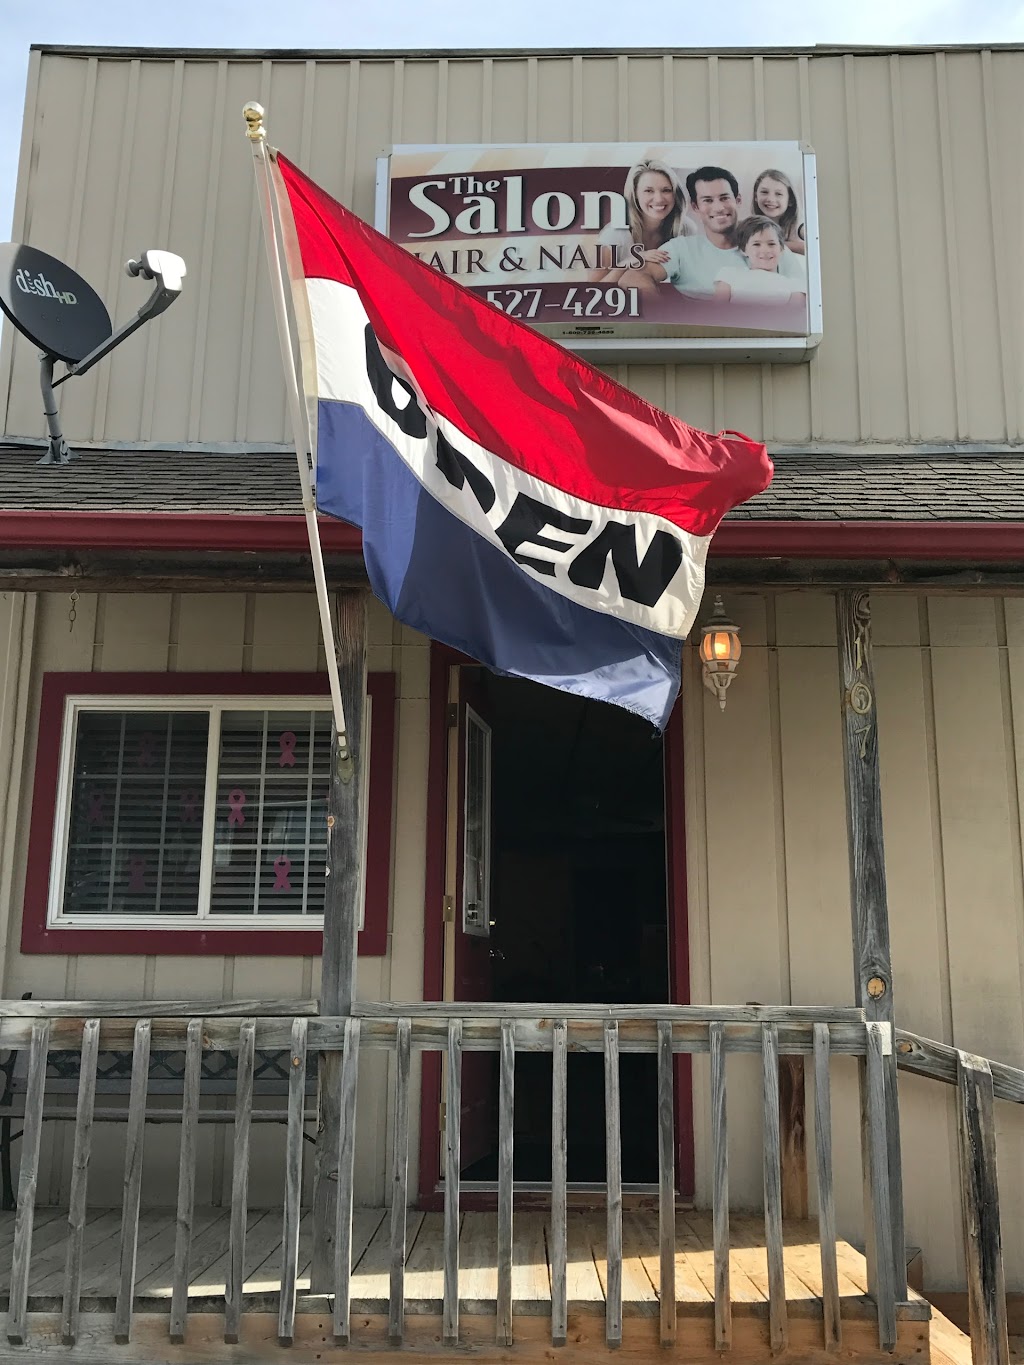 The Salon | 107 N Walnut St, Glenwood, IA 51534 | Phone: (712) 527-4291